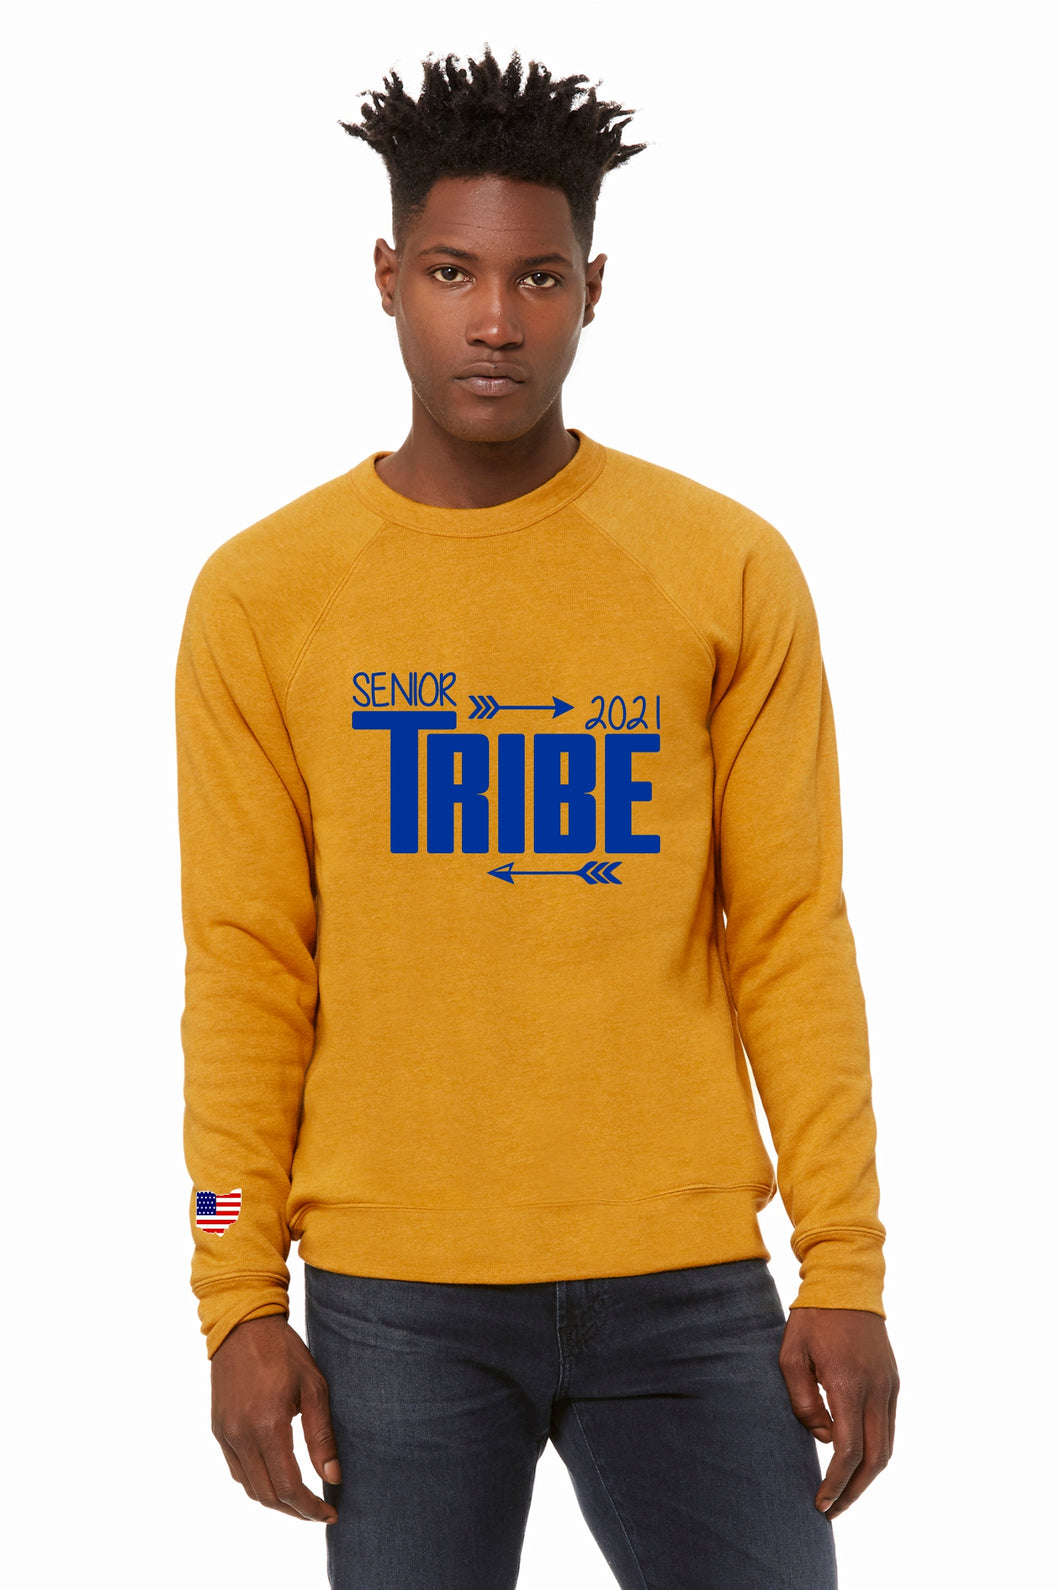 Senior Tribe 2021